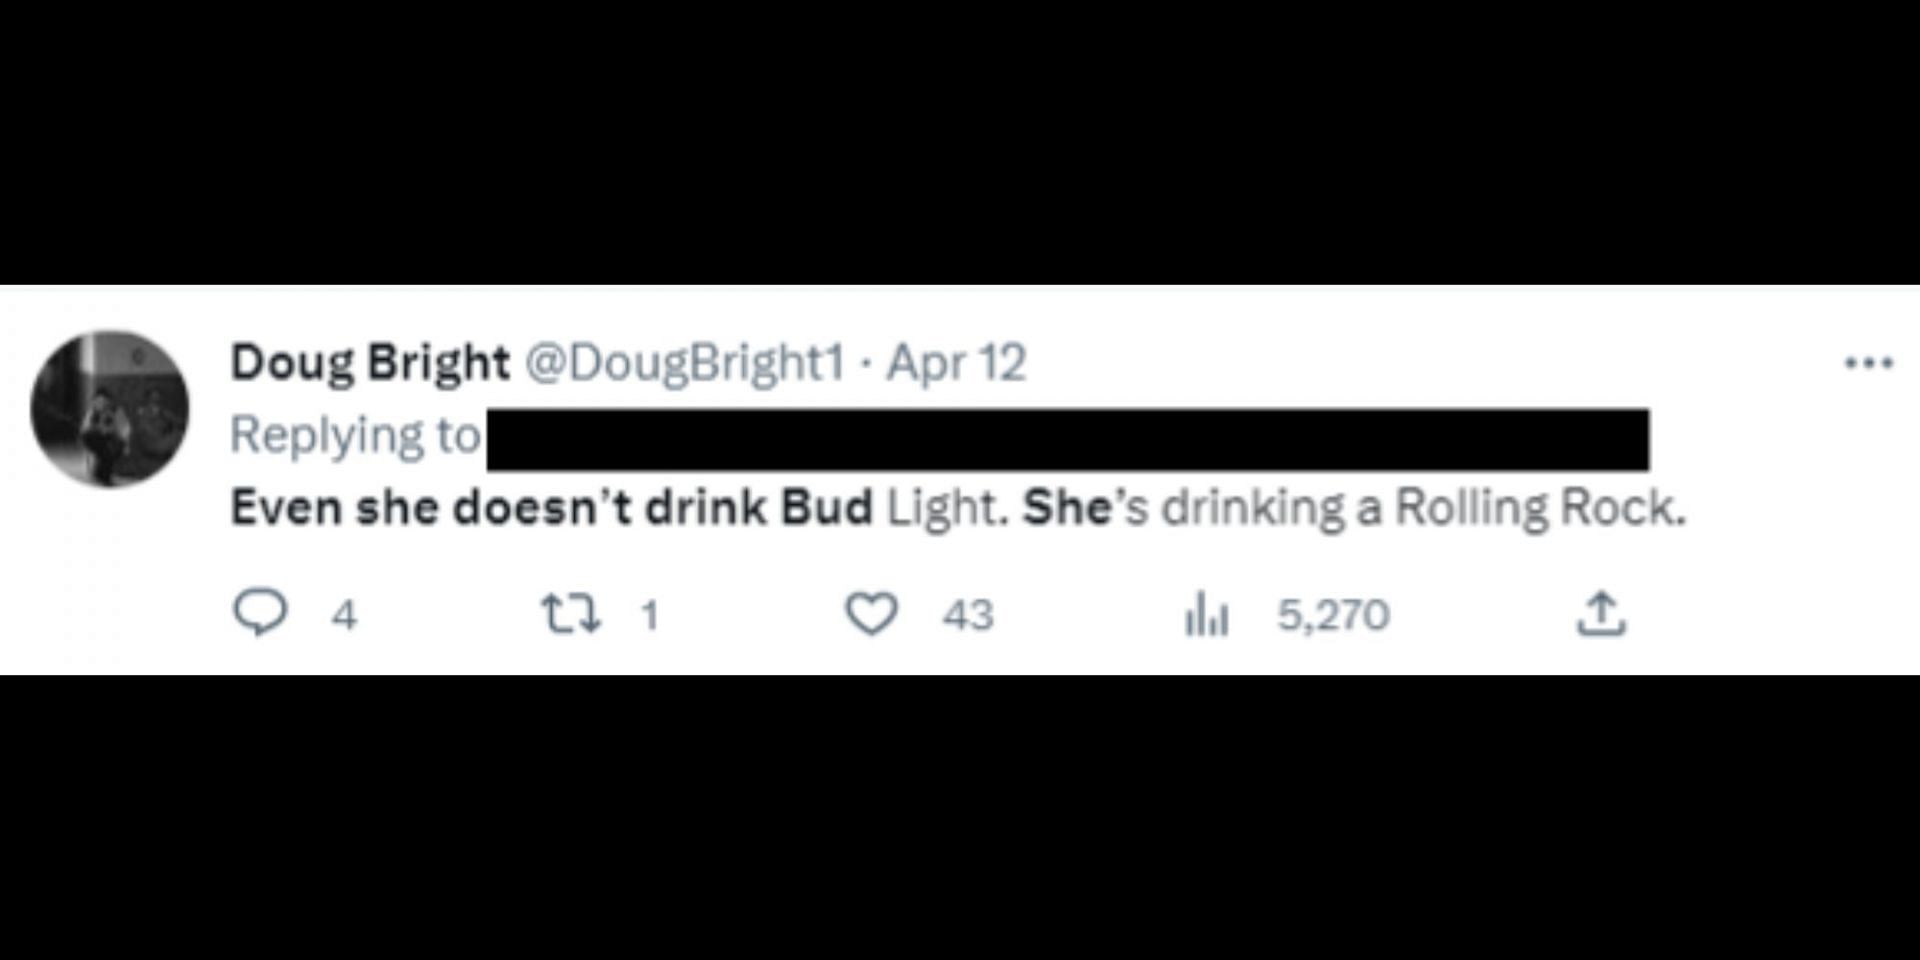 Netizens react to Bud Light's VP's leaked frat party photos. (Image via Twitter/@DougBright1)